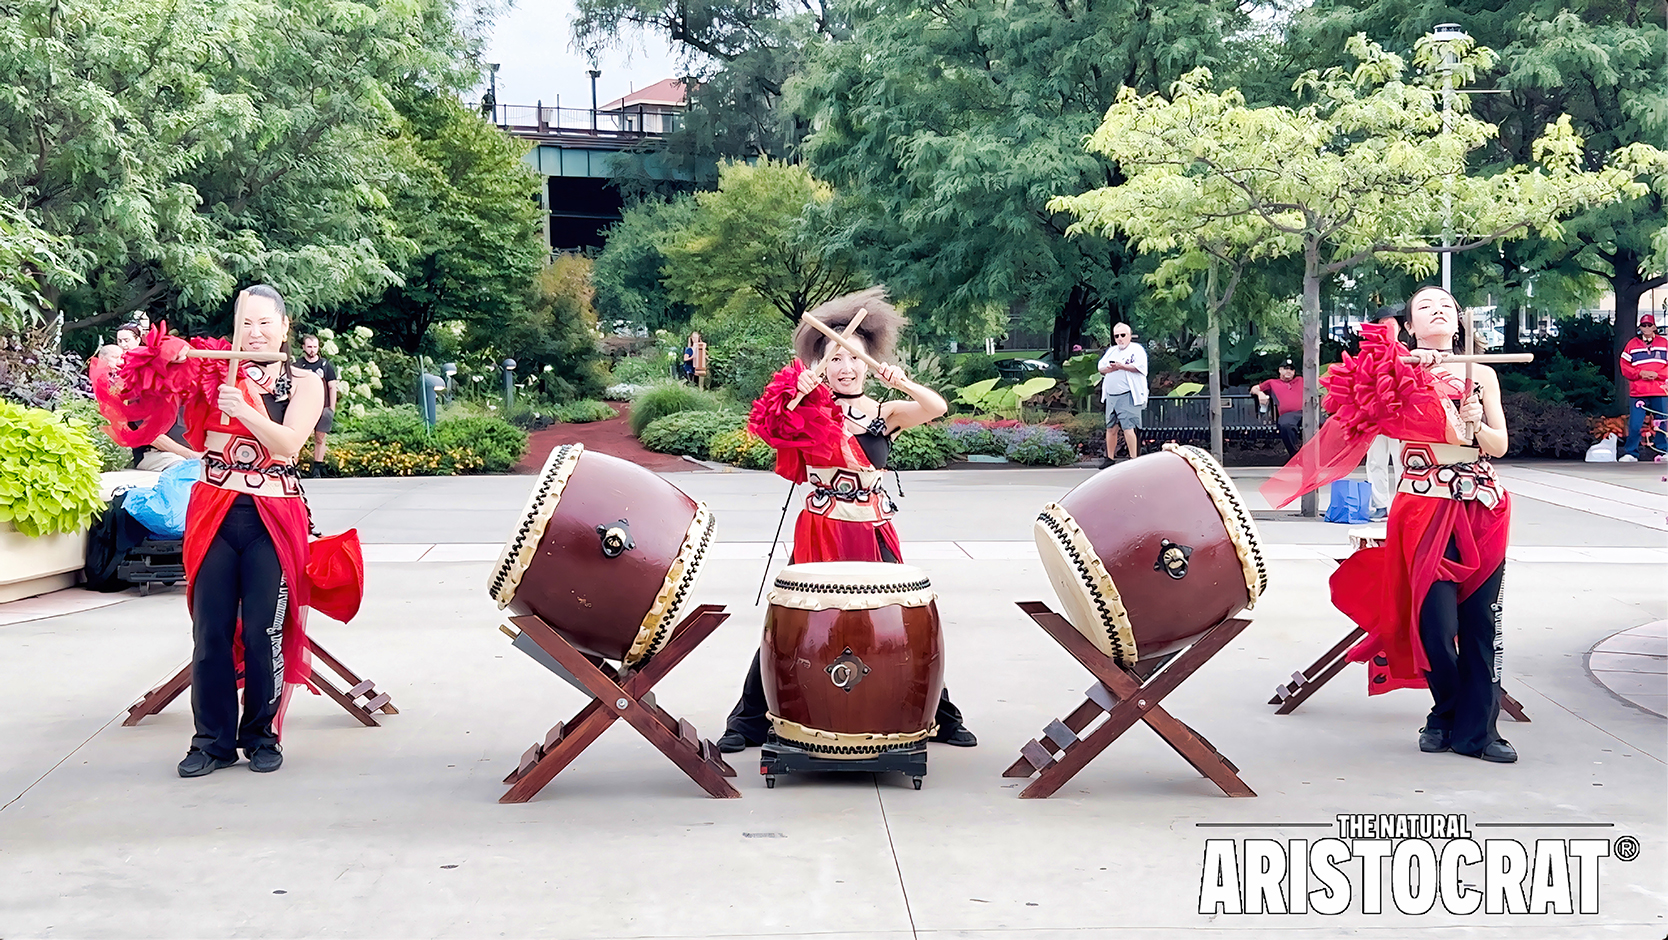 NYC Japanese Taiko drumming group COBU performers. Photo Credit: The Natural Aristocrat® - Nir Regev